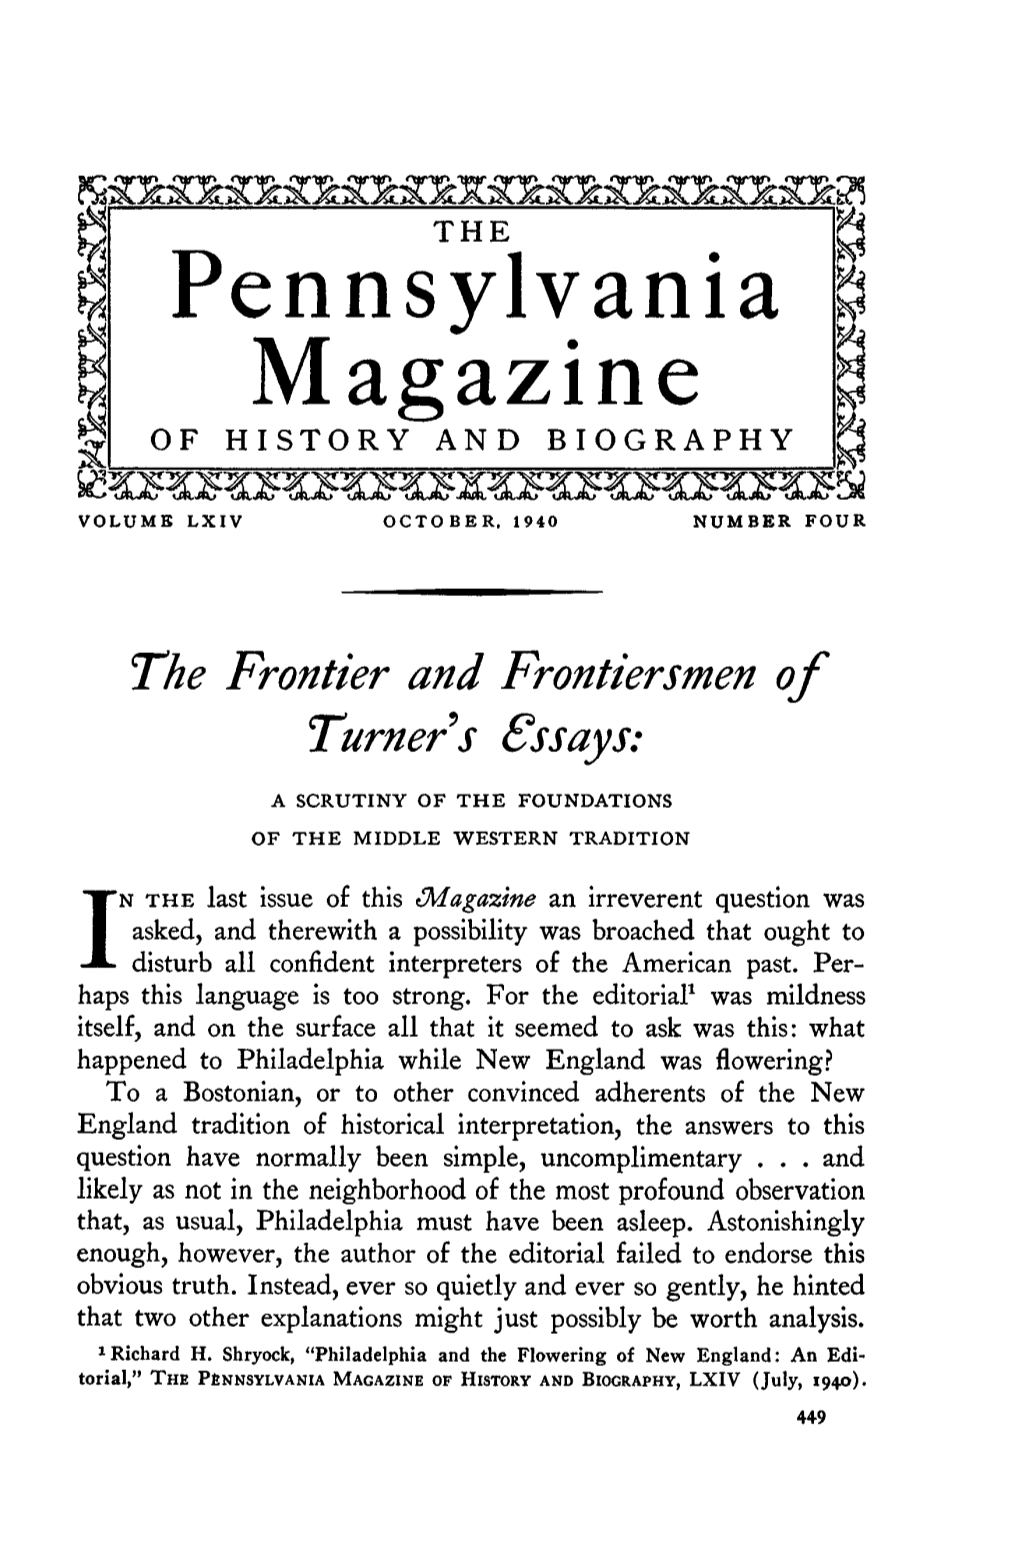 The Frontier and Frontiersmen of Turner's Essays